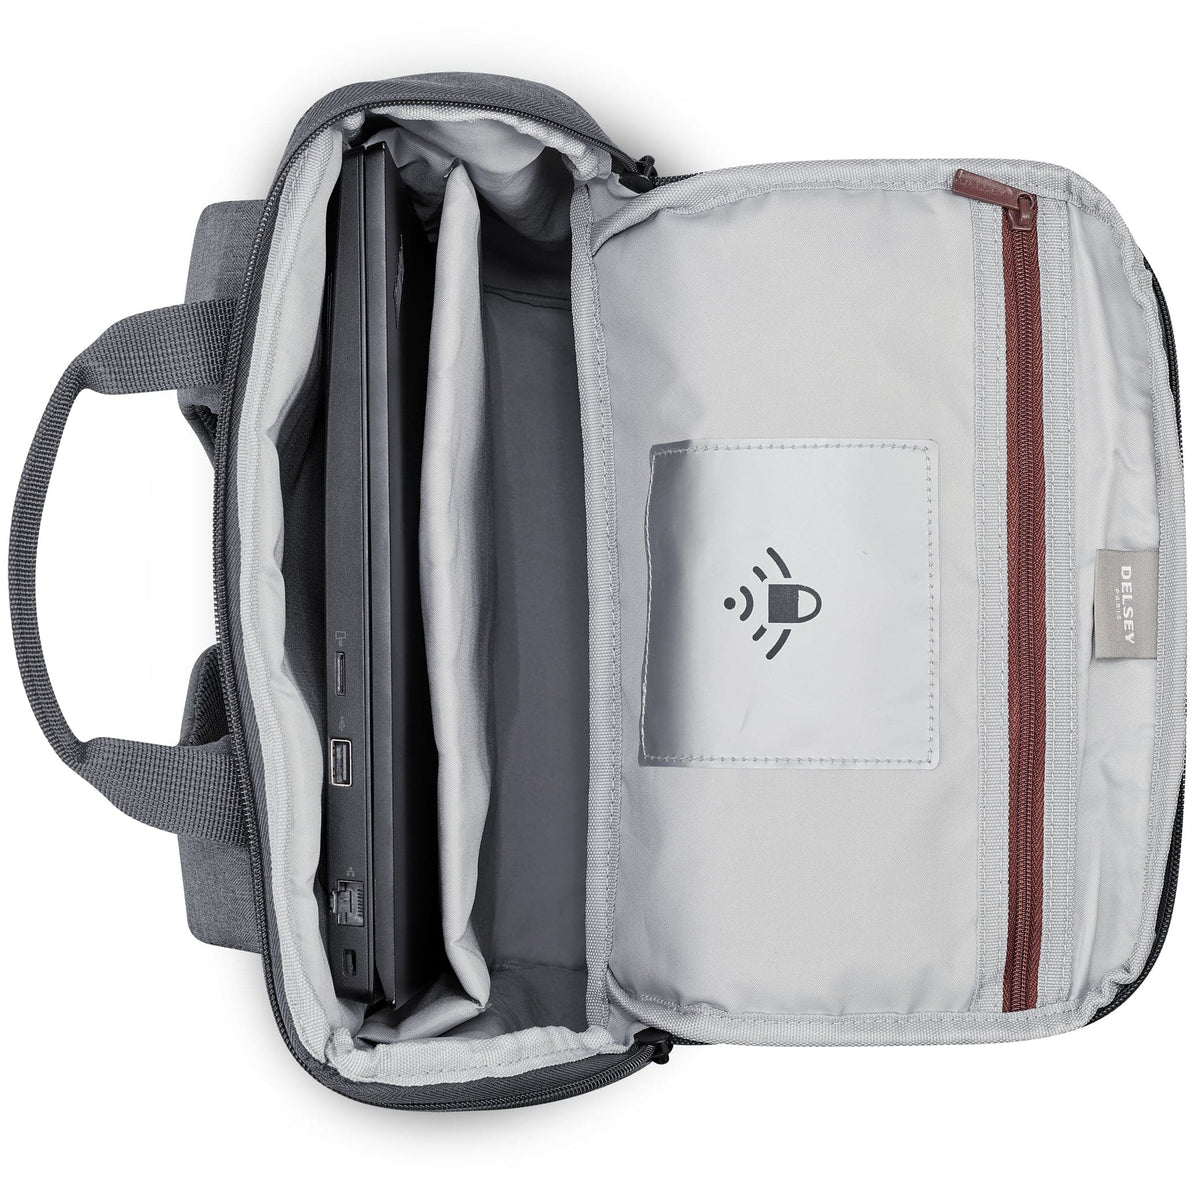 Delsey Maubert 2.0 Laptop Backpack